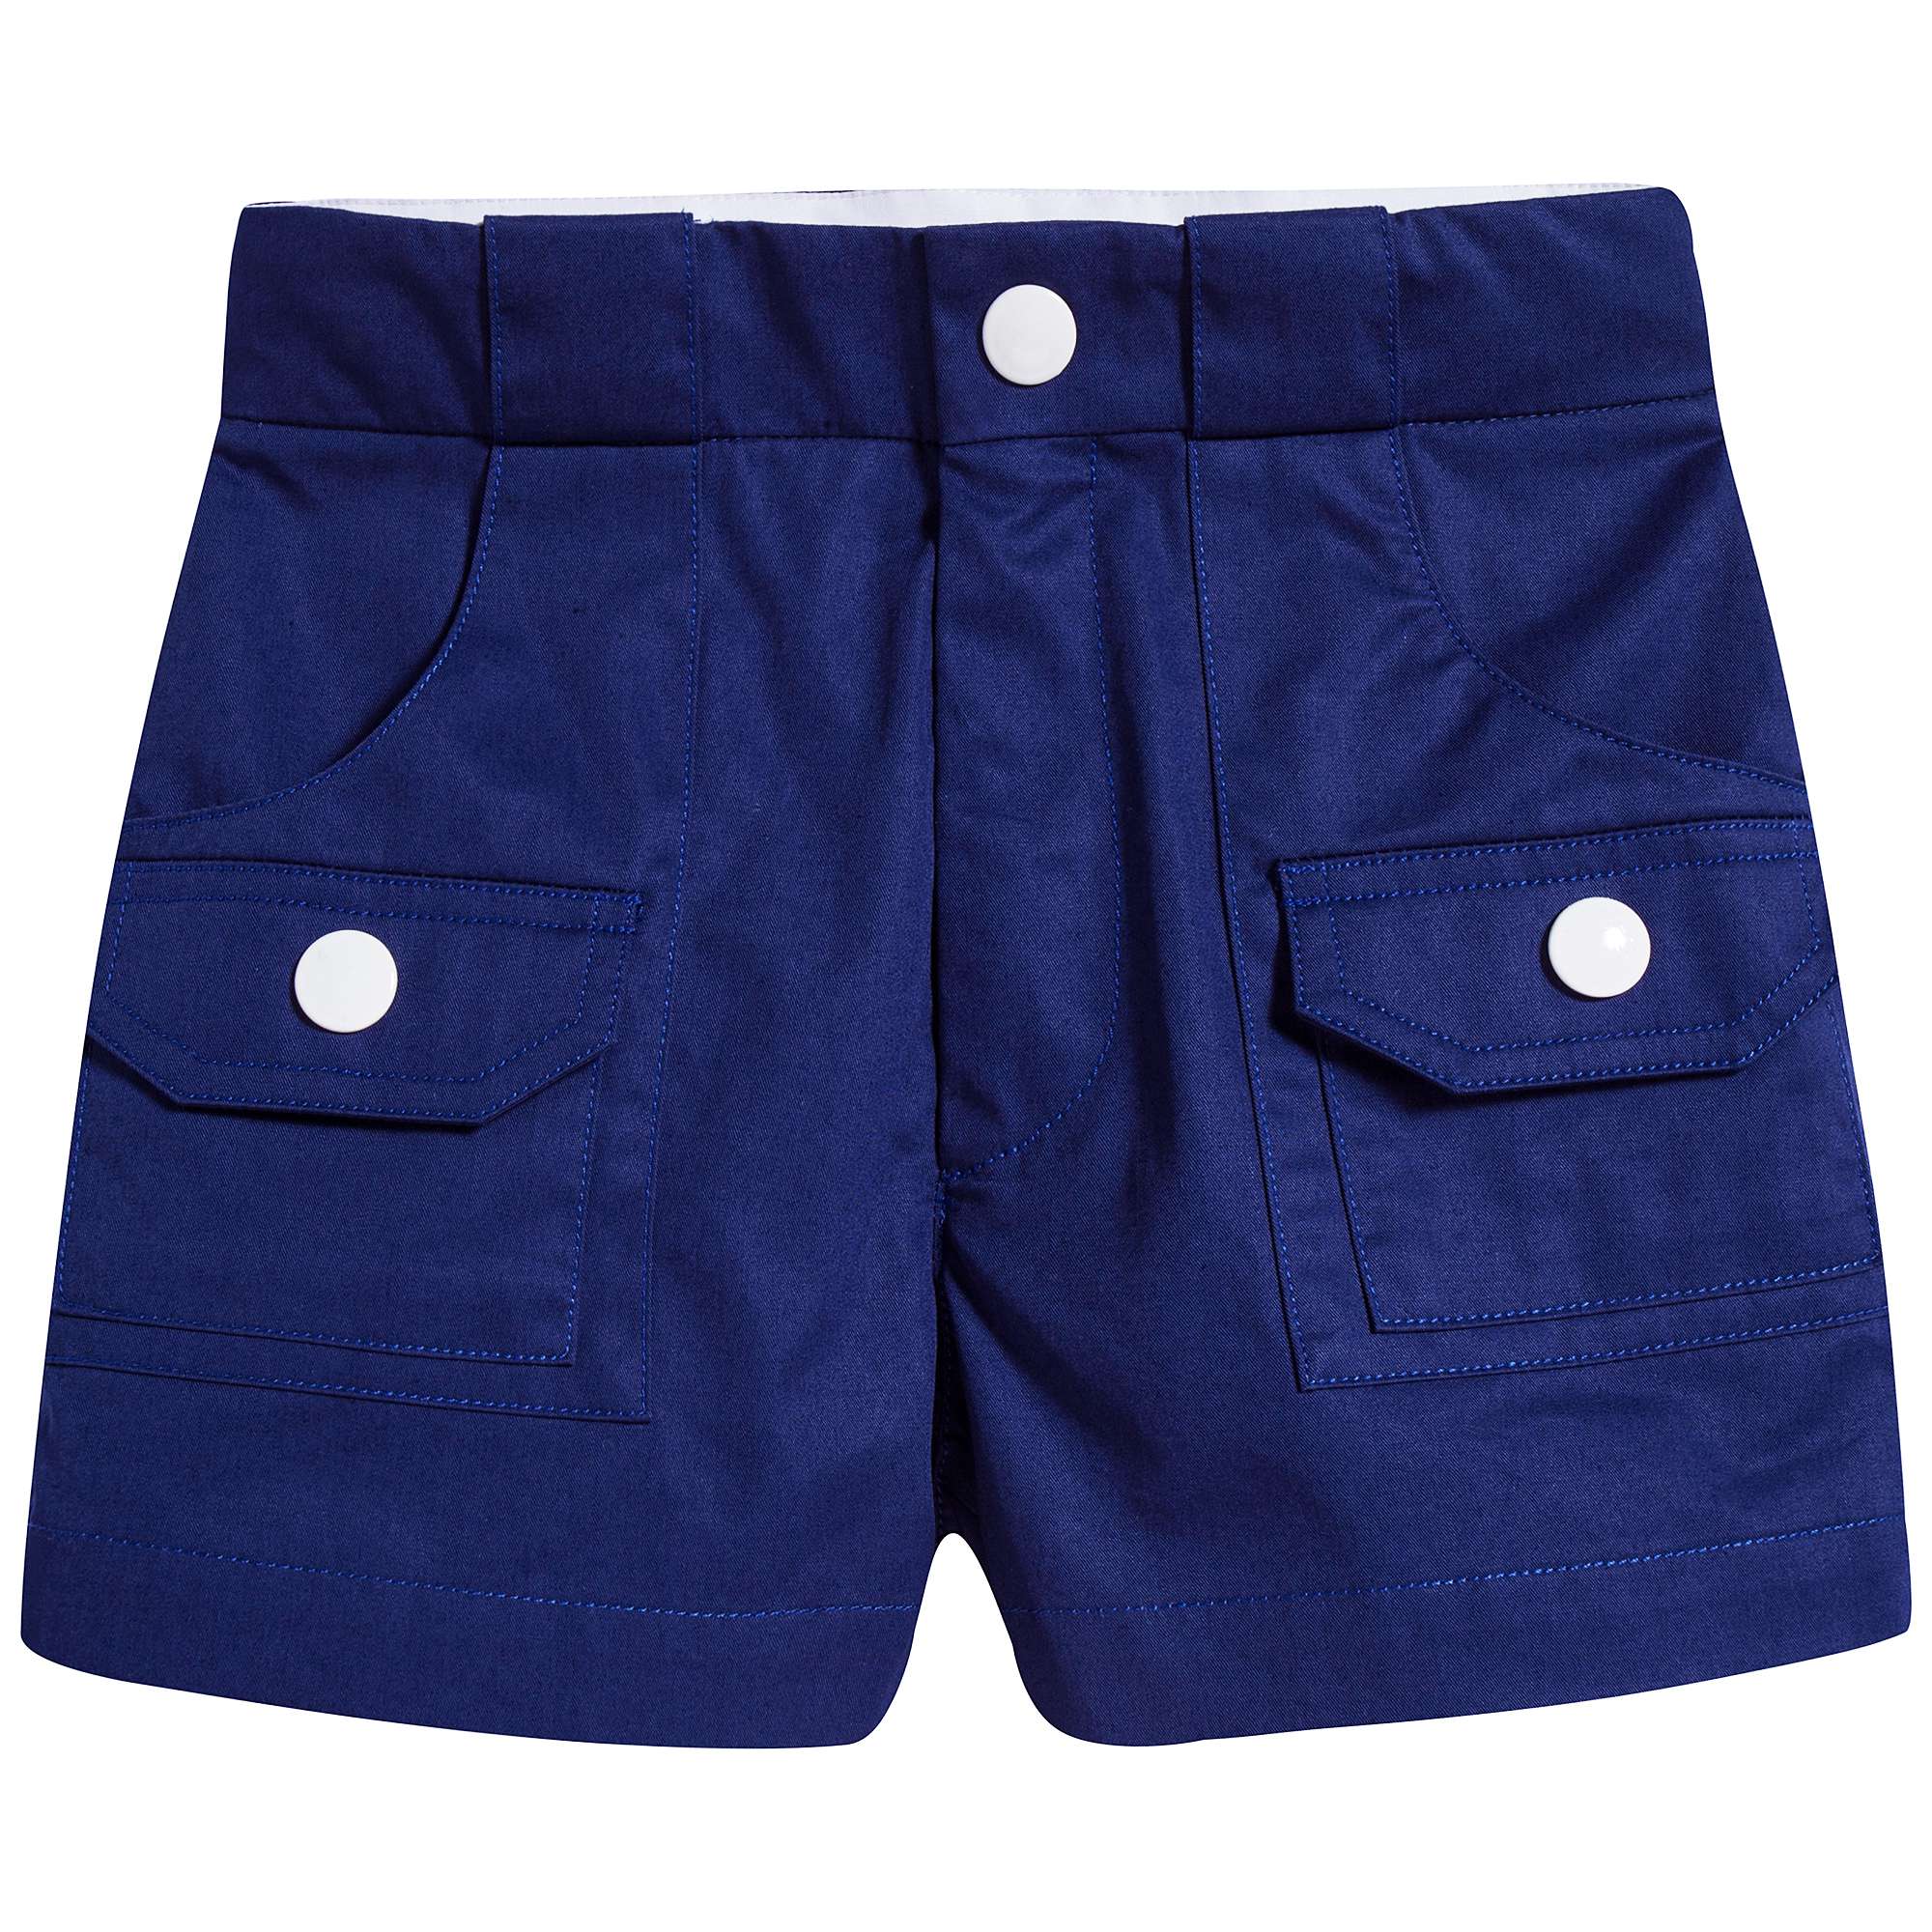 Girls Intense Blue Cotton Shorts